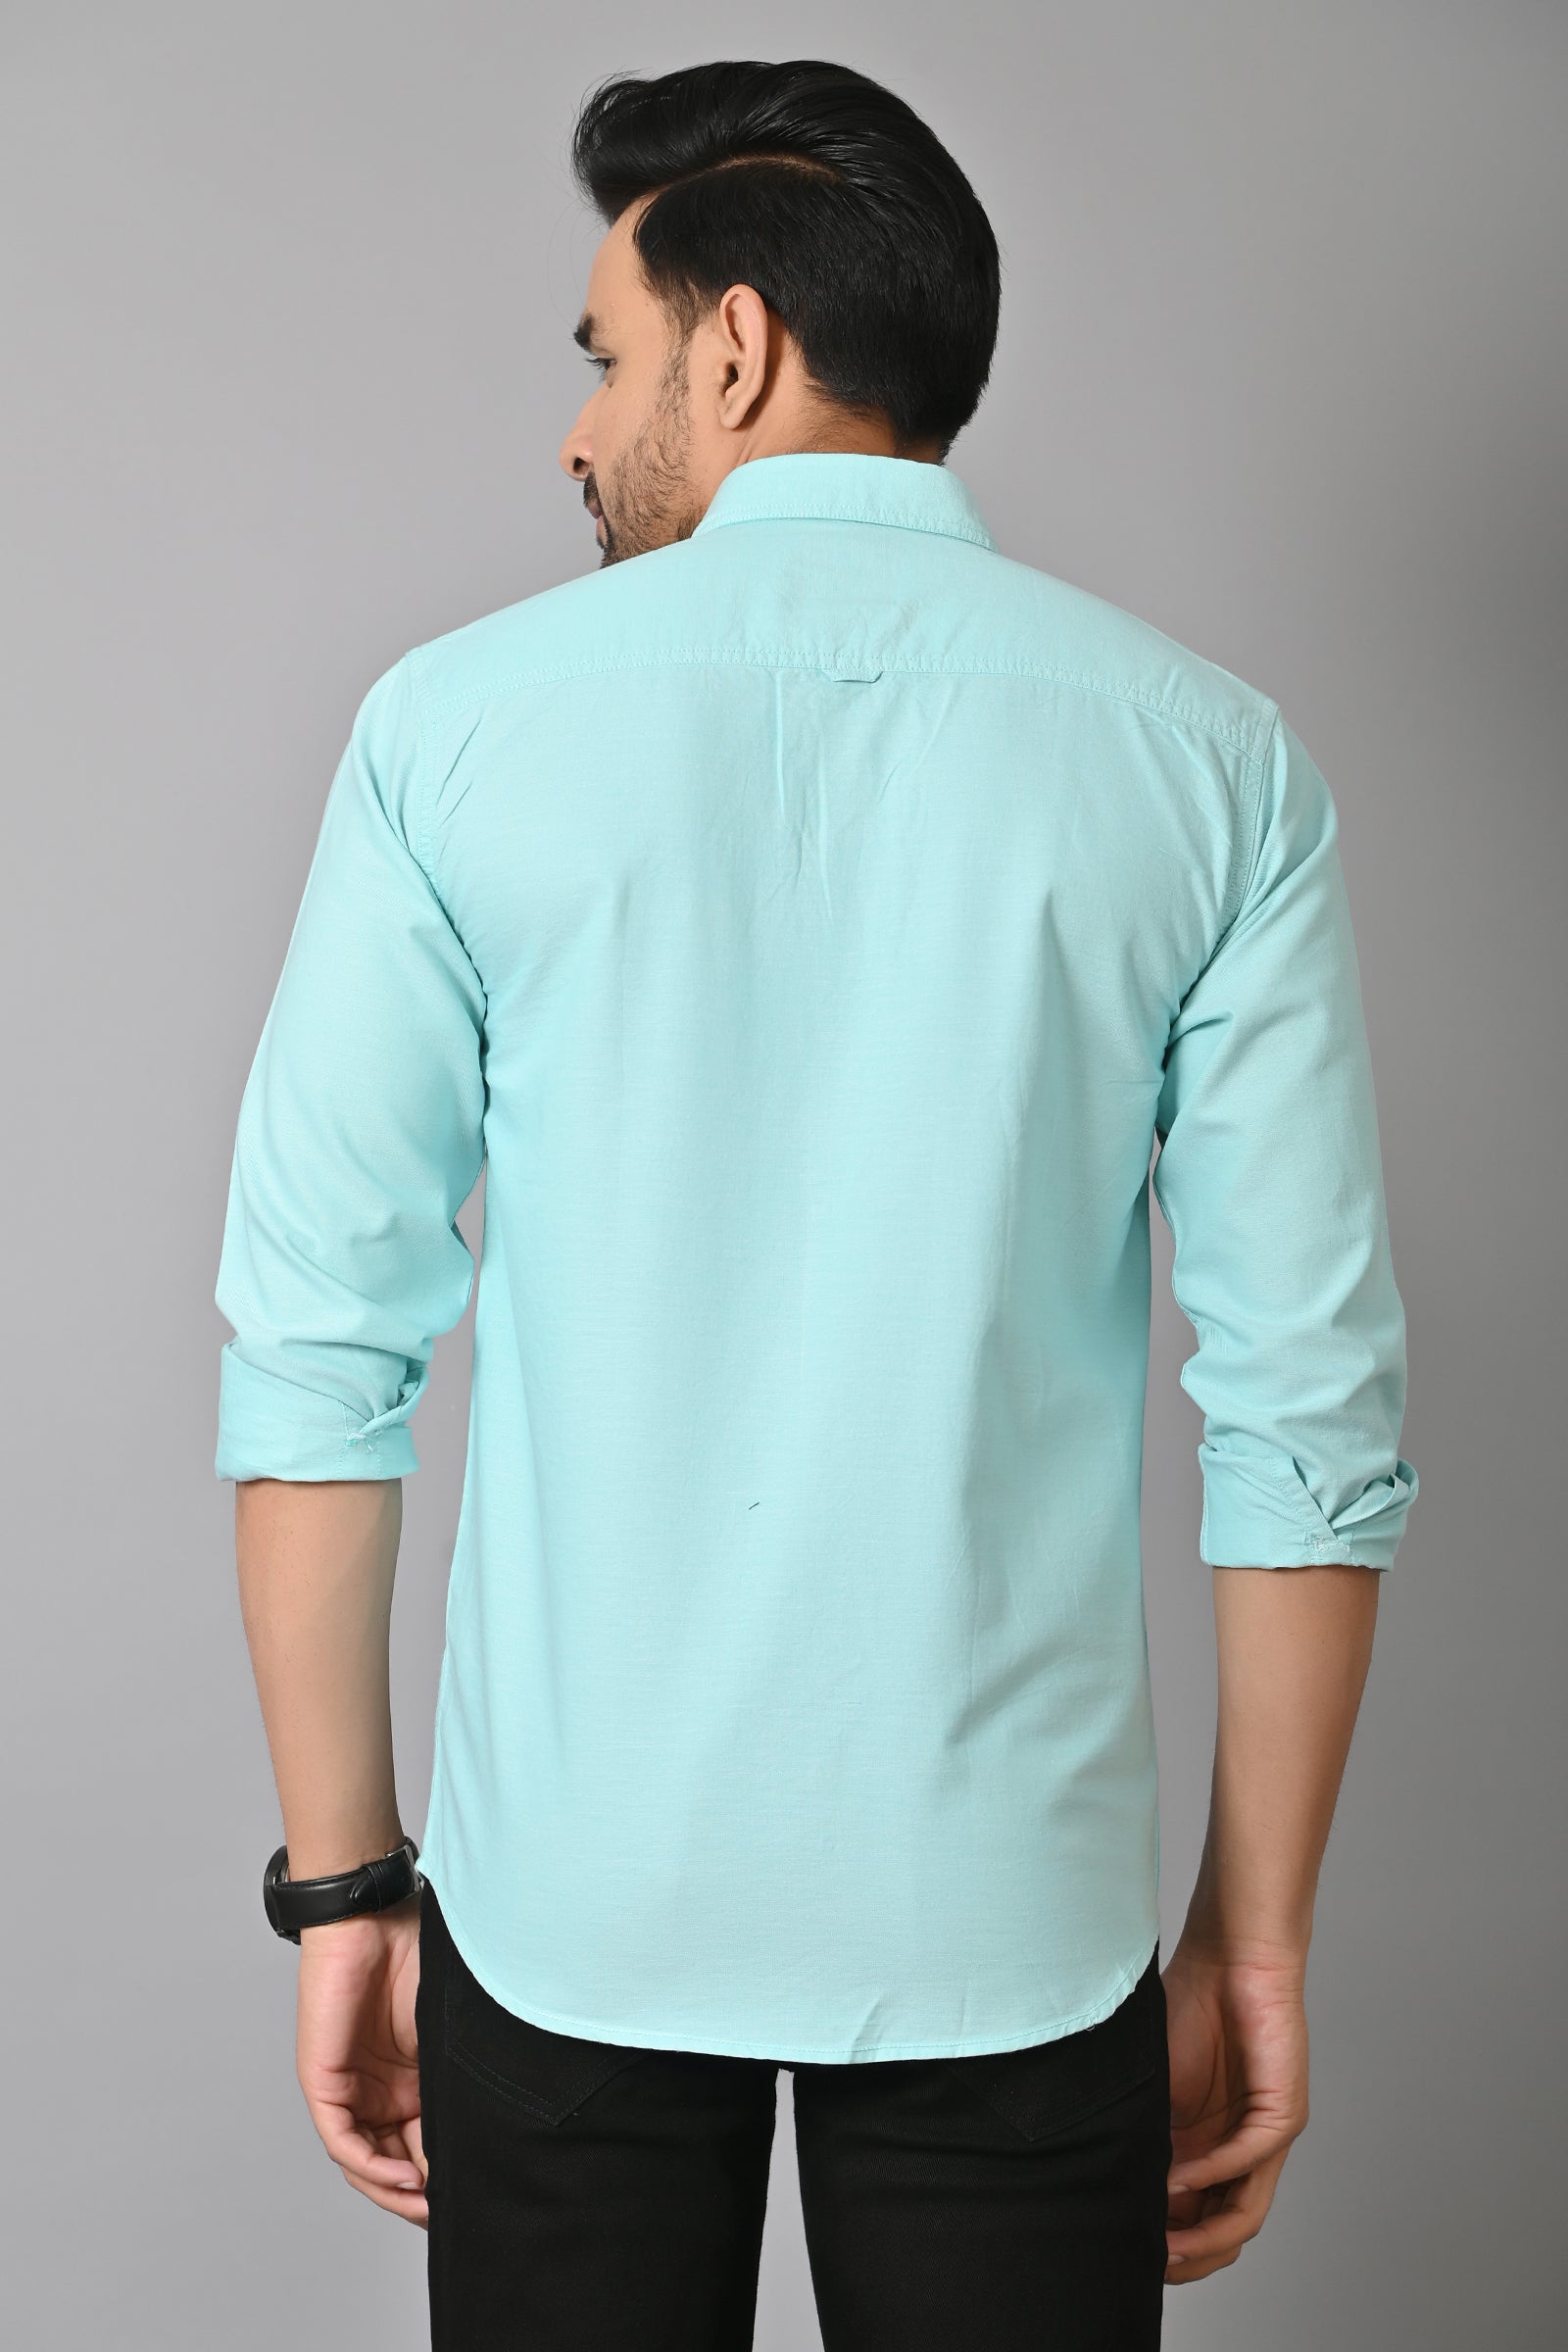 Jaguro Men's Formal Shirt Cotton Turquoise